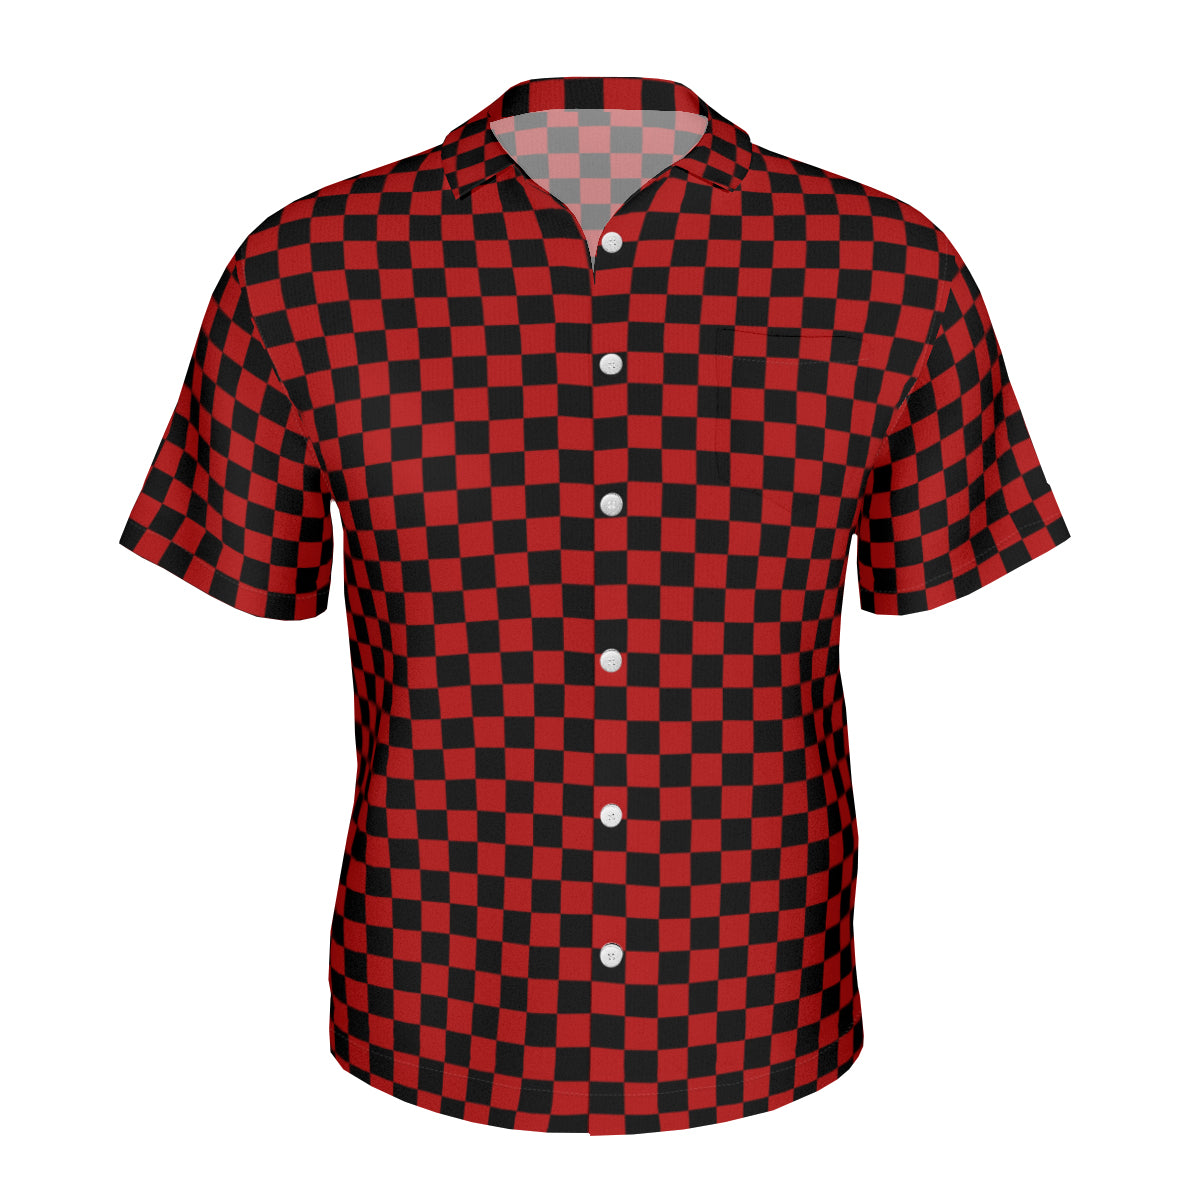 Men's Black and Red Checker Shirt, Vintage Style Checker Shirt, Retro Shirt Men, Checker Short Sleeve Shirt